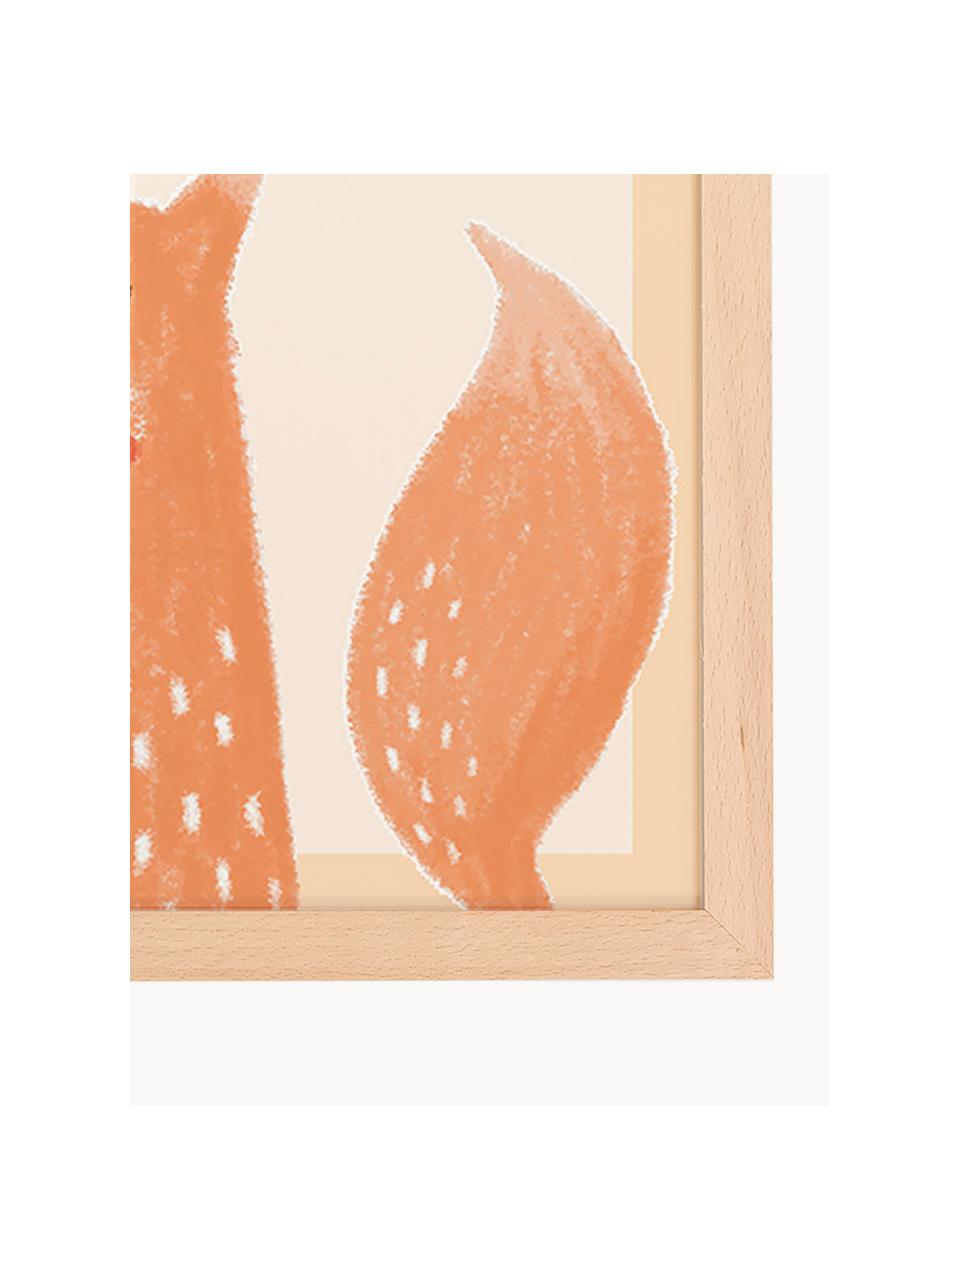 Gerahmter Digitaldruck The Fox, Rahmen: Buchenholz, FSC zertifizi, Bild: Digitaldruck auf Papier, , Front: Acrylglas, Helles Holz, Orange, B 33 x H 43 cm